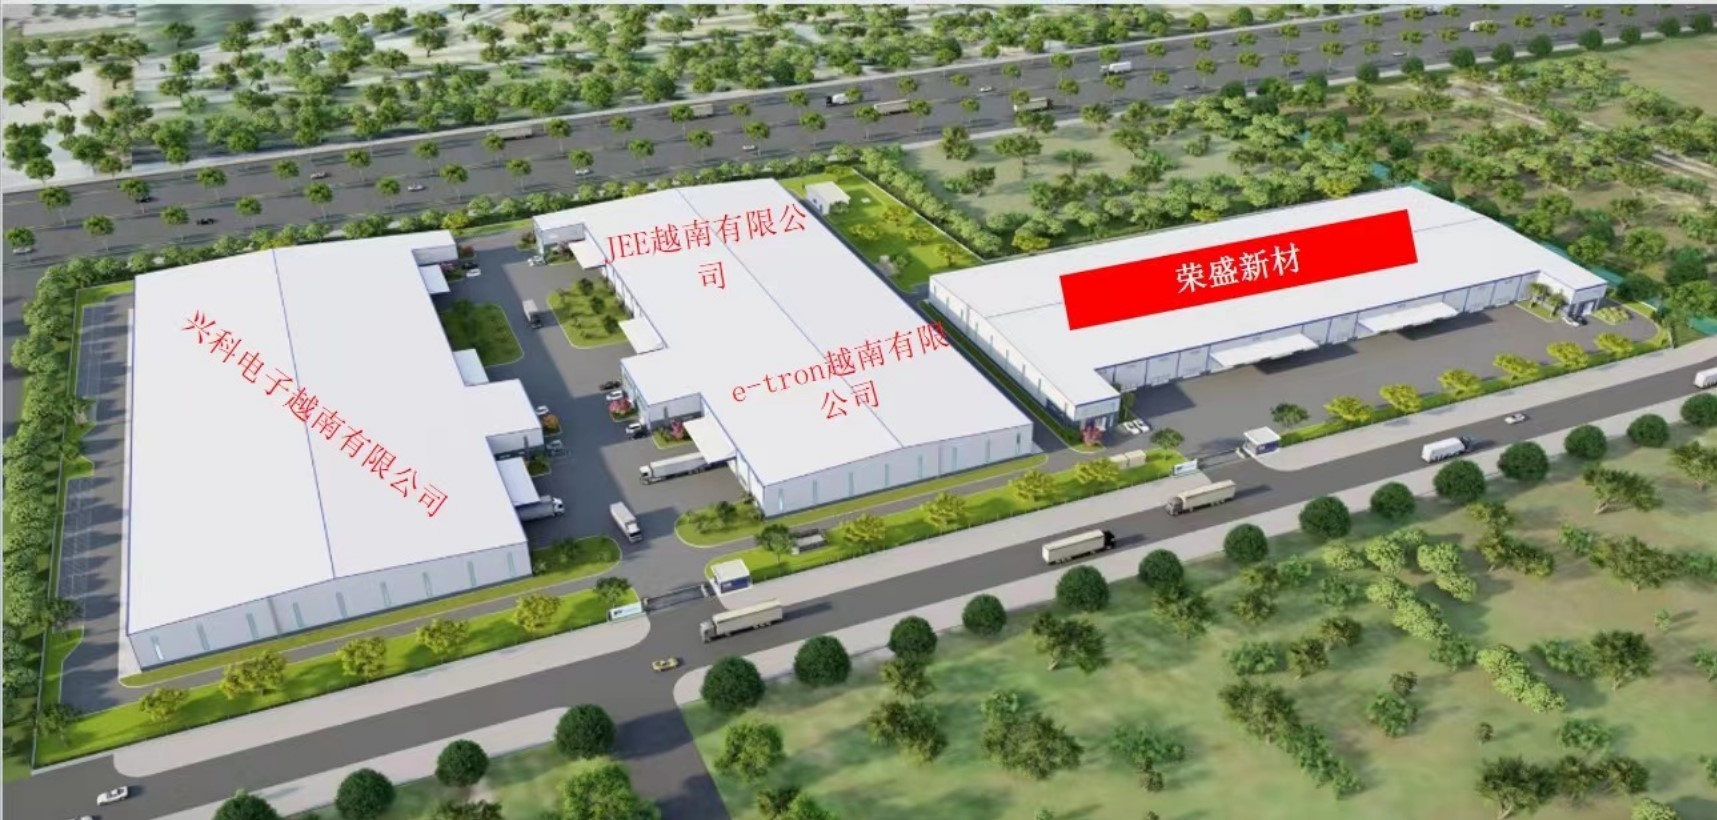 Shanghai Huitian New Material Co., Ltd 공장 생산 라인